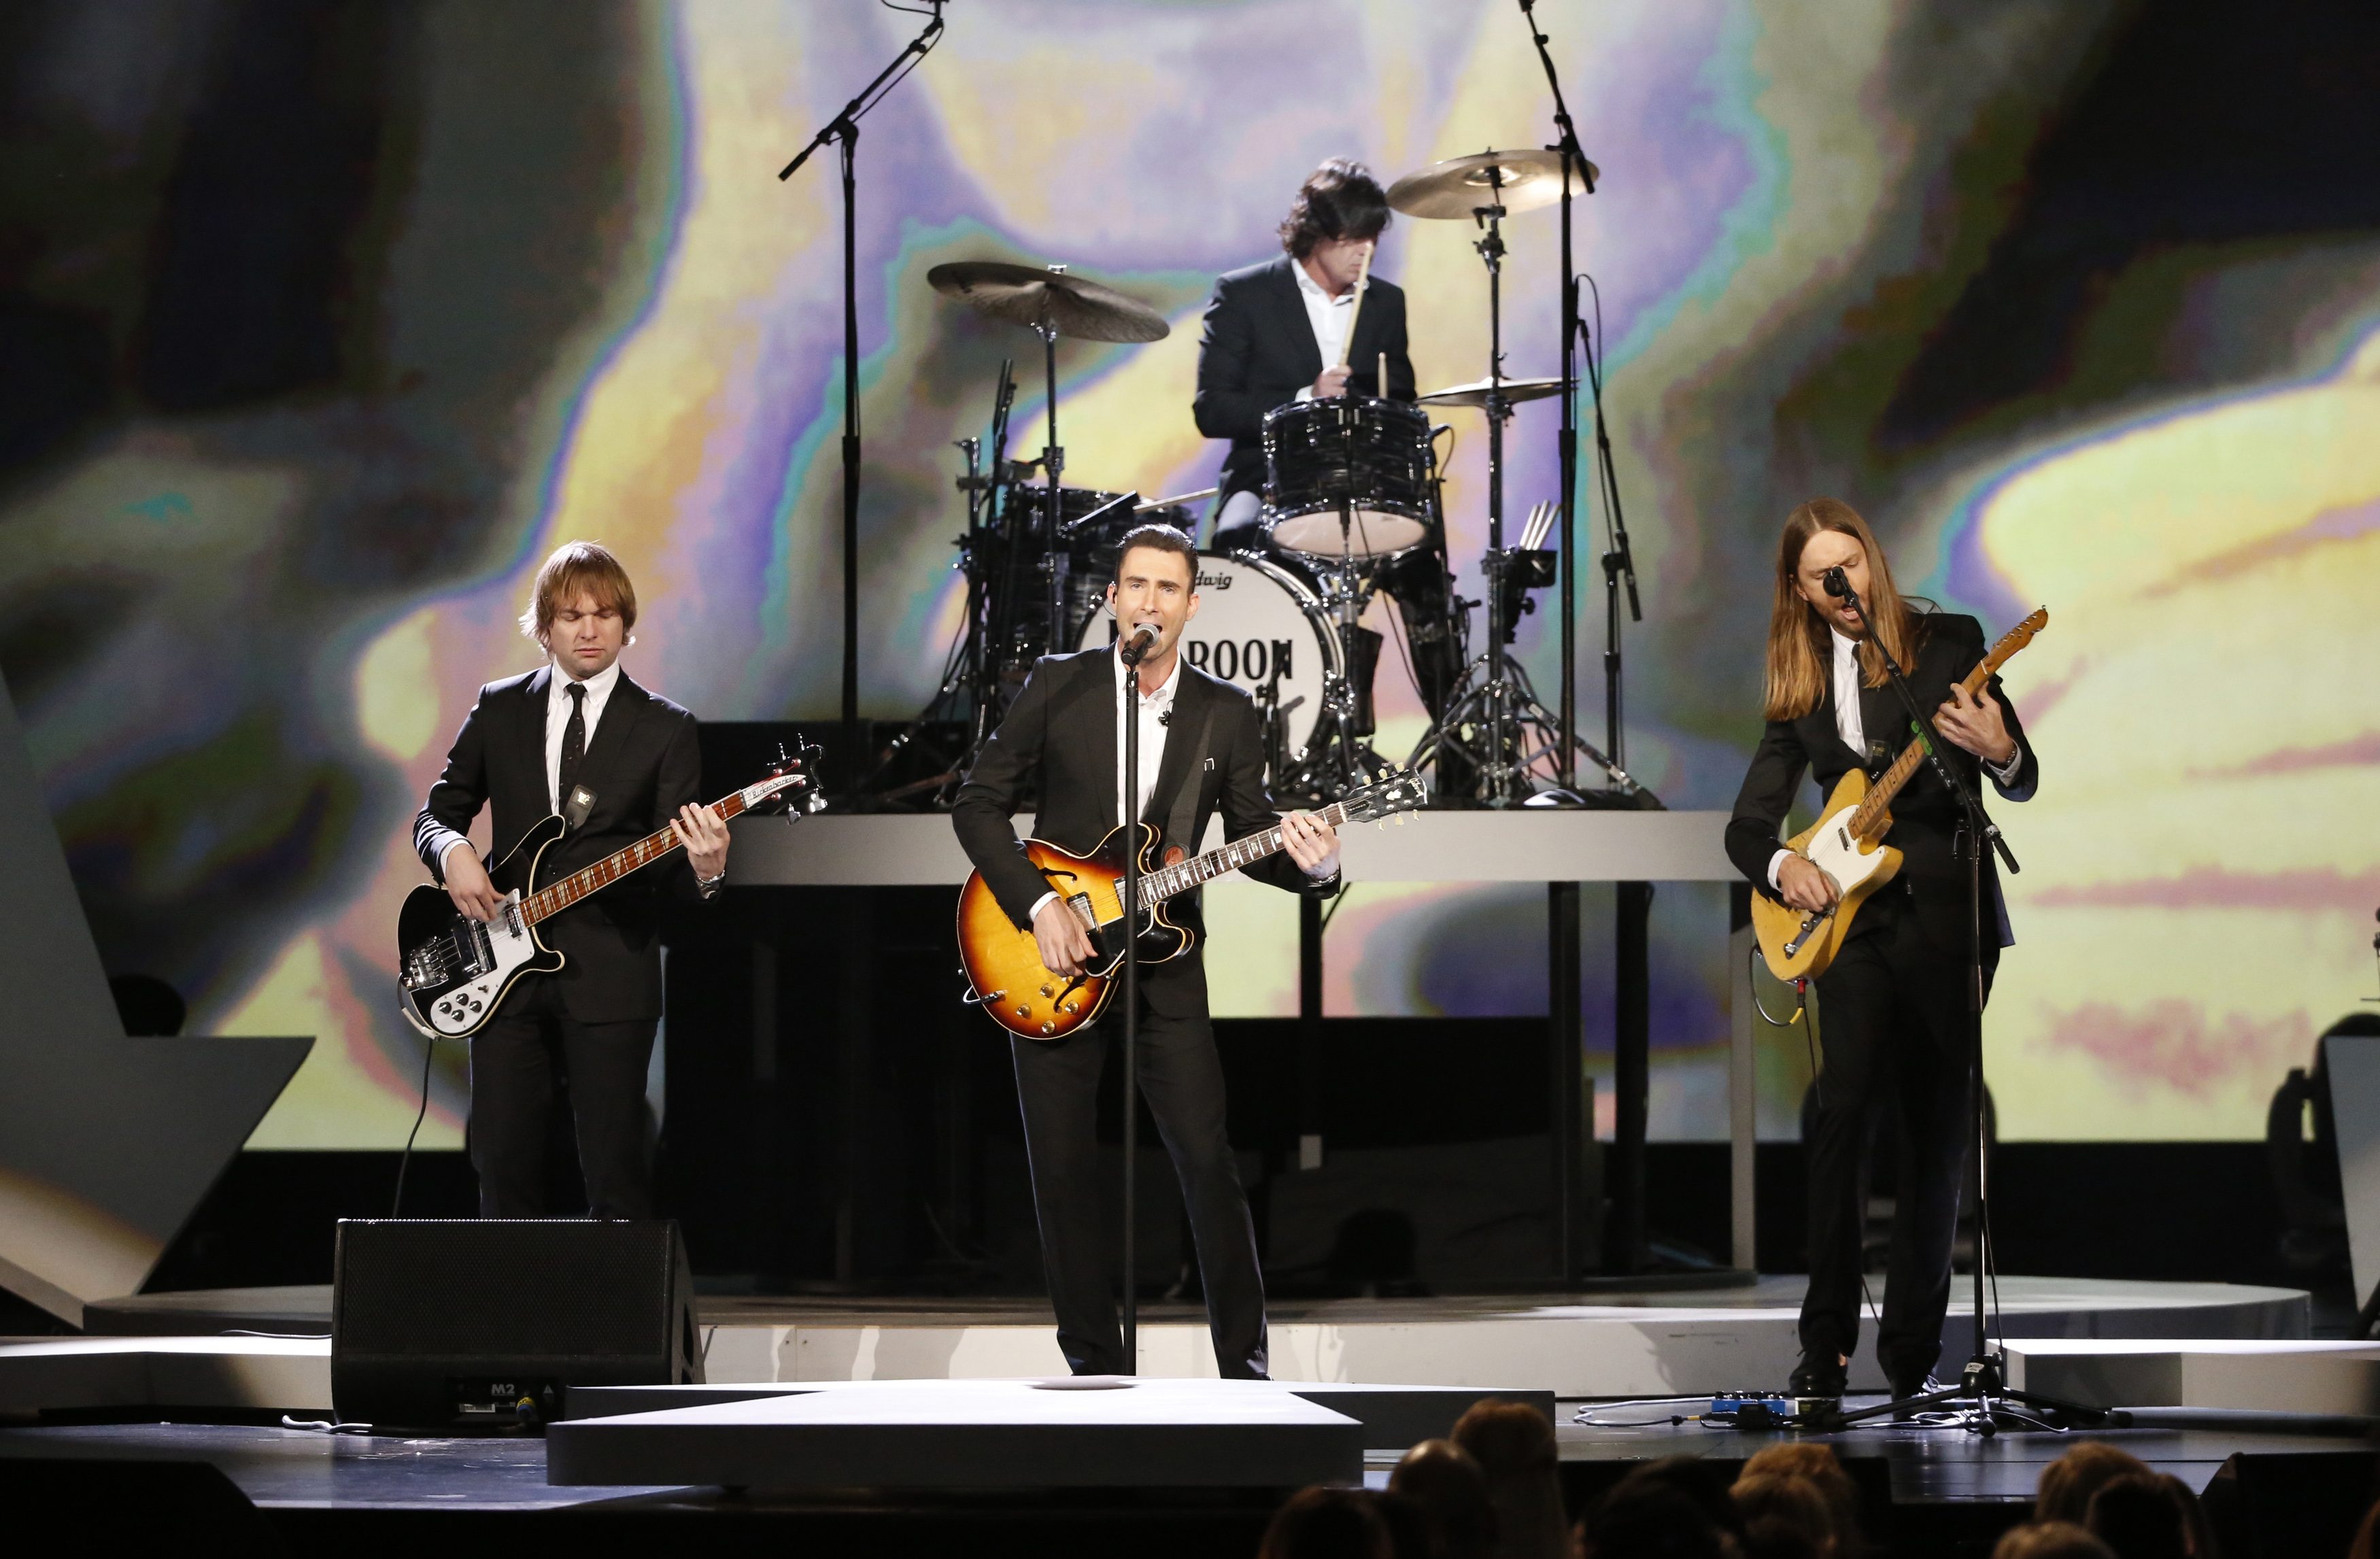 Beatles, mass wedding attract big TV audience to Grammys